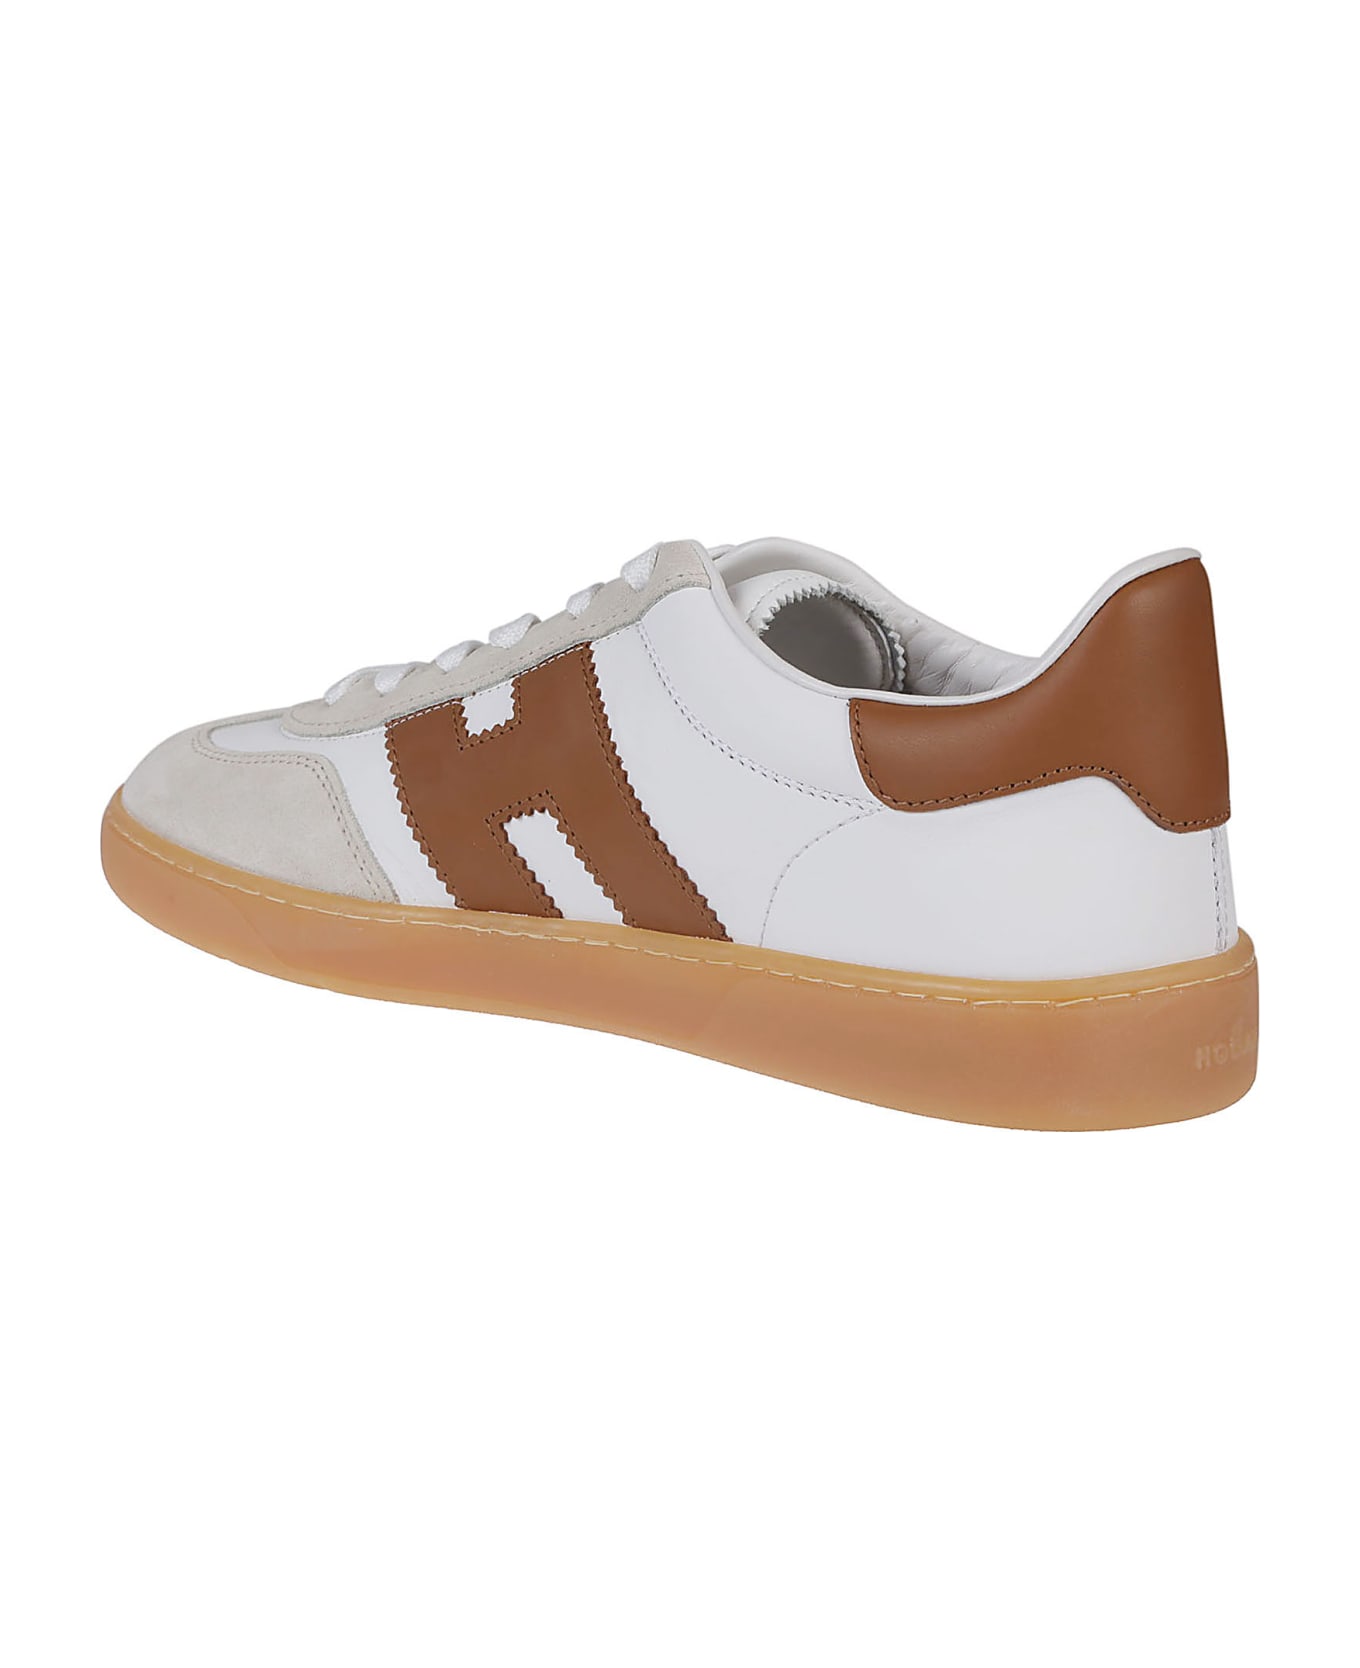 Hogan Cool Sneakers - M Bianco/avorio/kenia Scuro